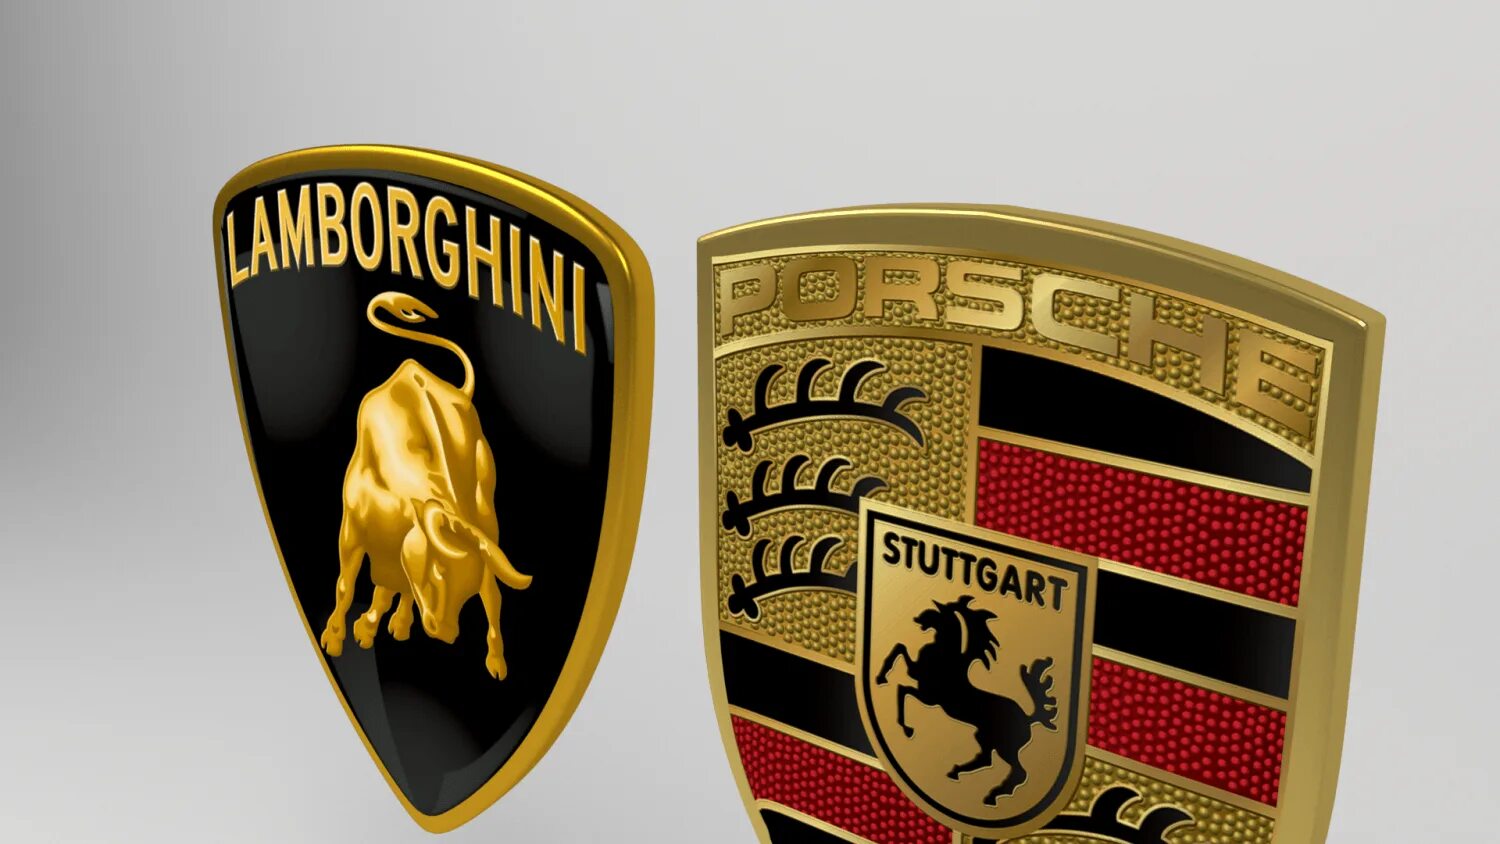 Ламба значок. Марка Ламборджини. Значок Ламборгини и порш. Porsche logo. Логотип Феррари Порше и Ламборджини.